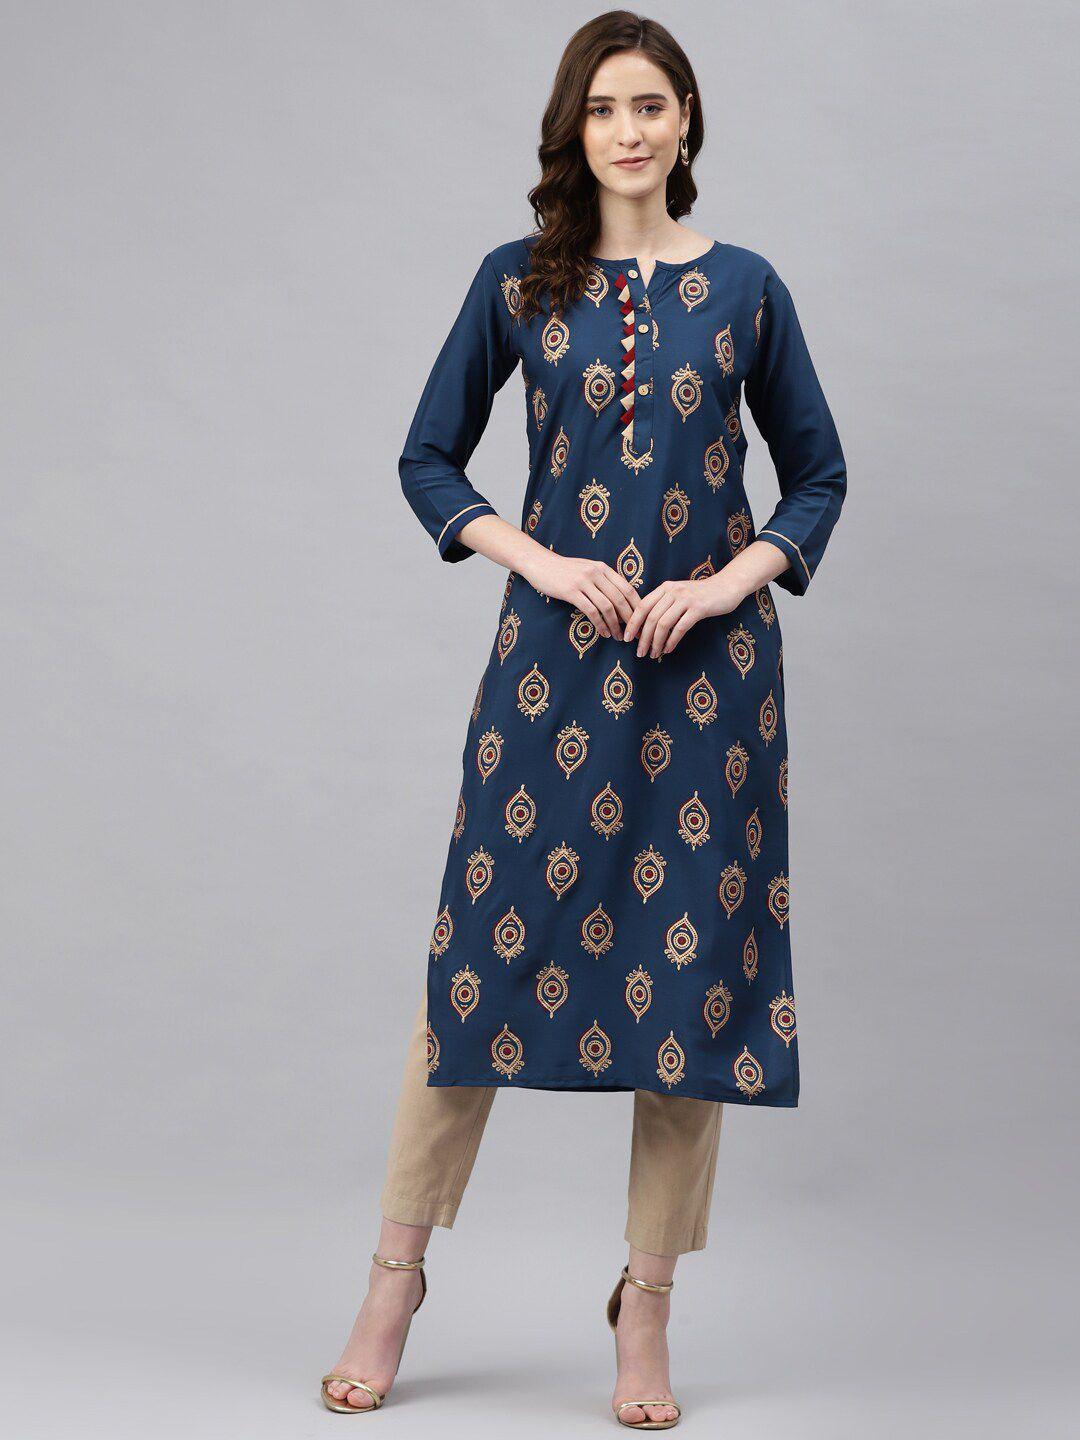 somras women blue ethnic motifs printed kurta